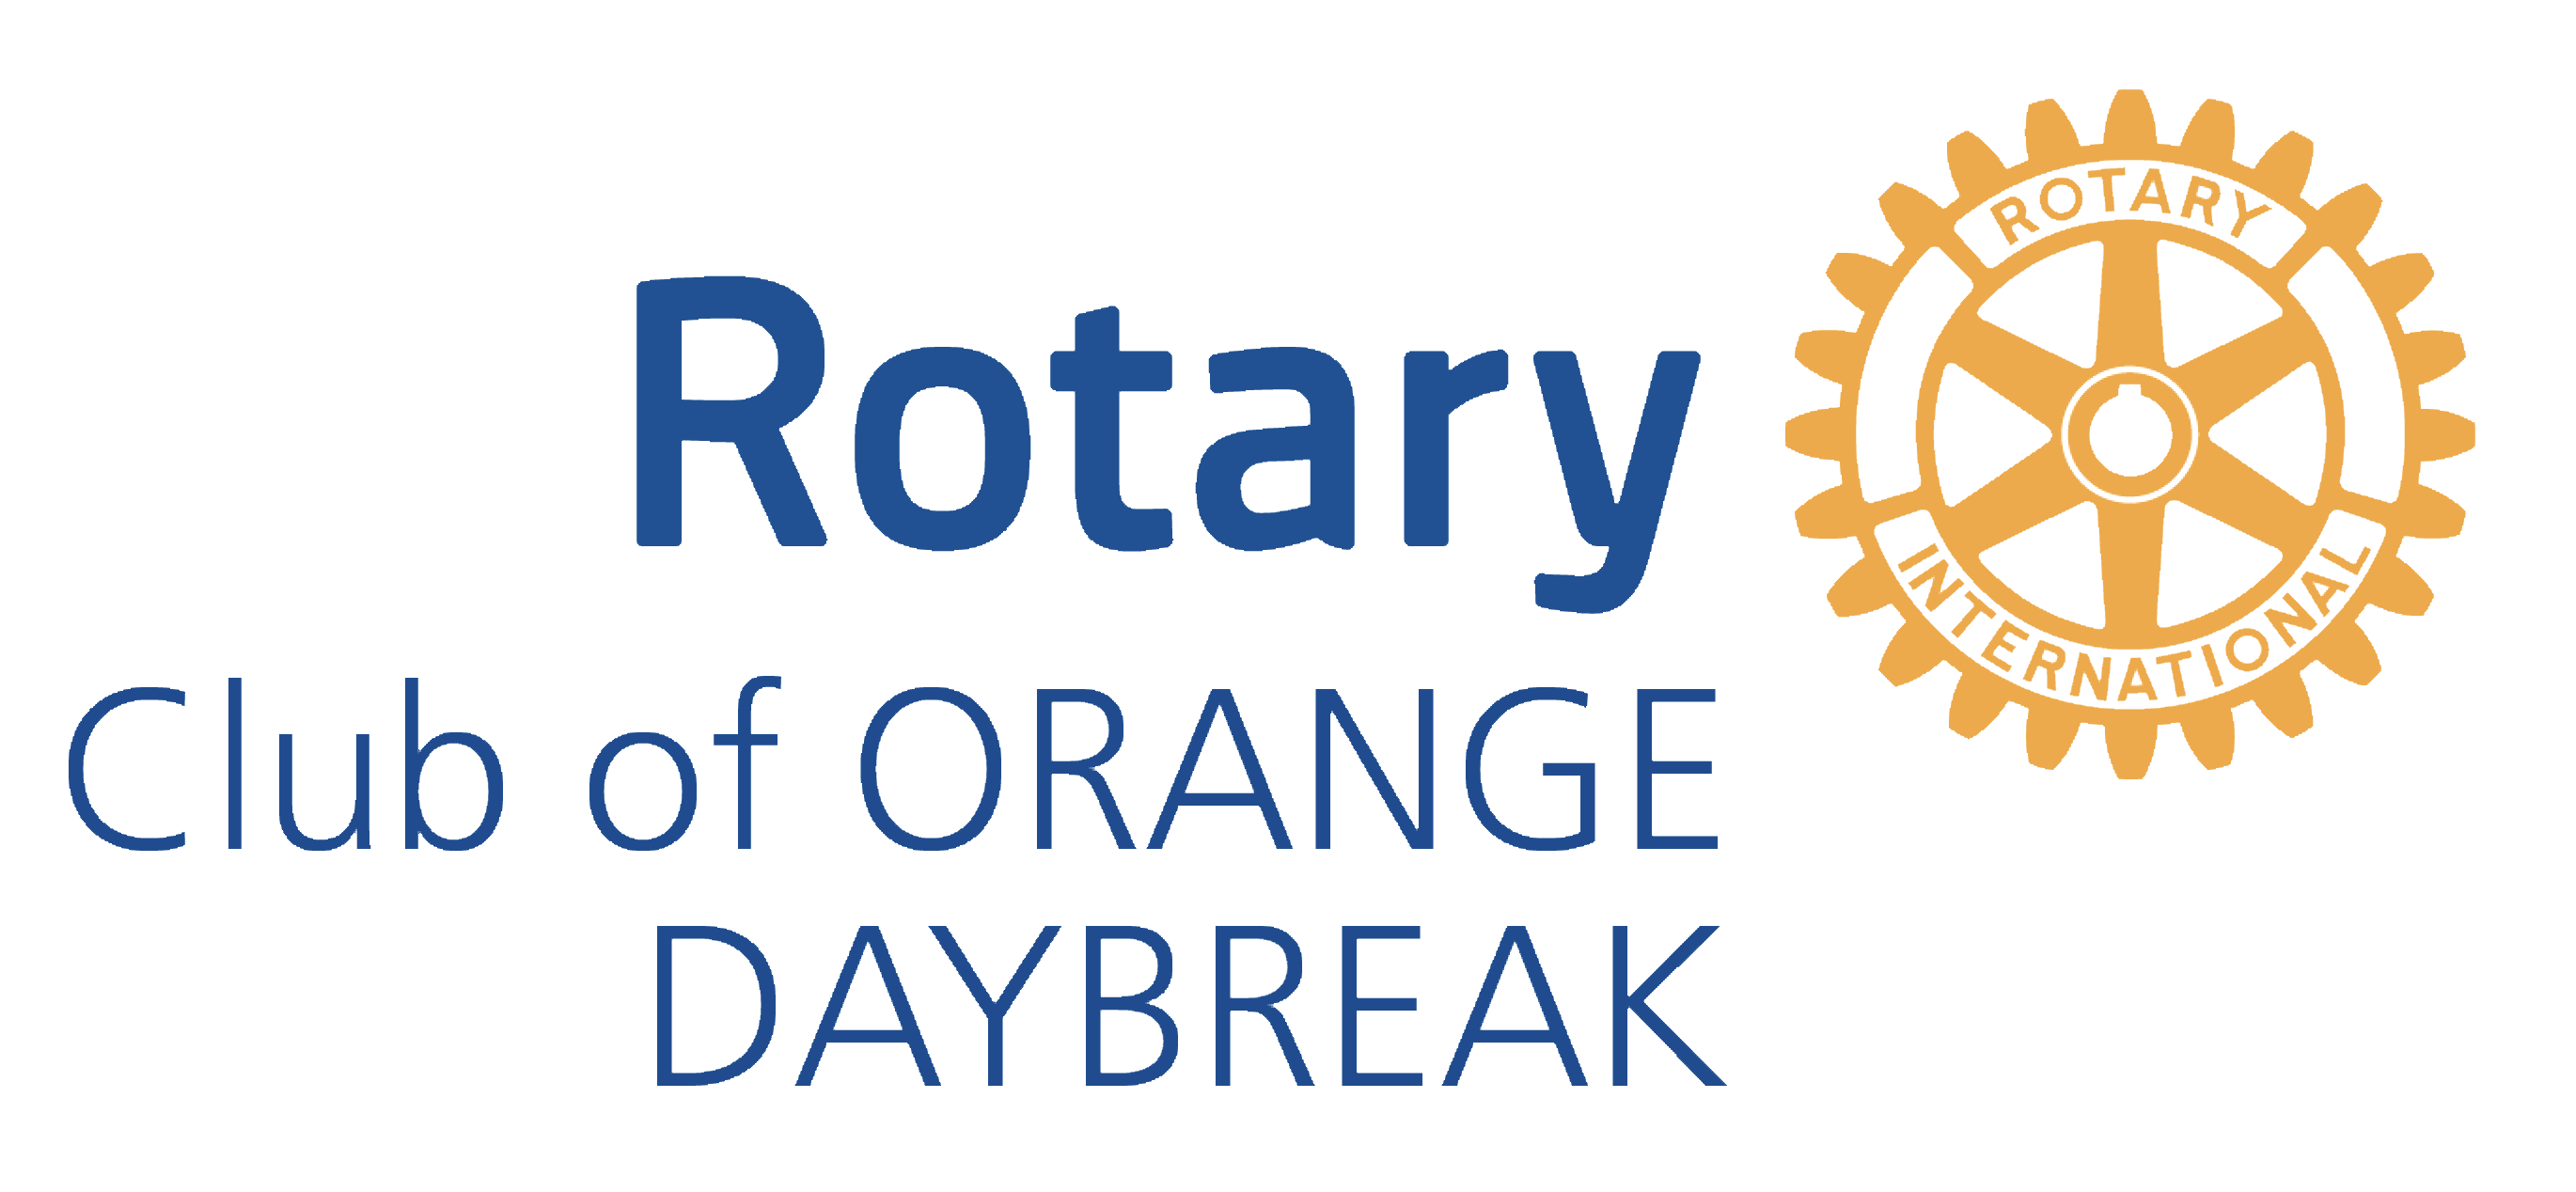 Rotary Club of Orange Daybreak logo